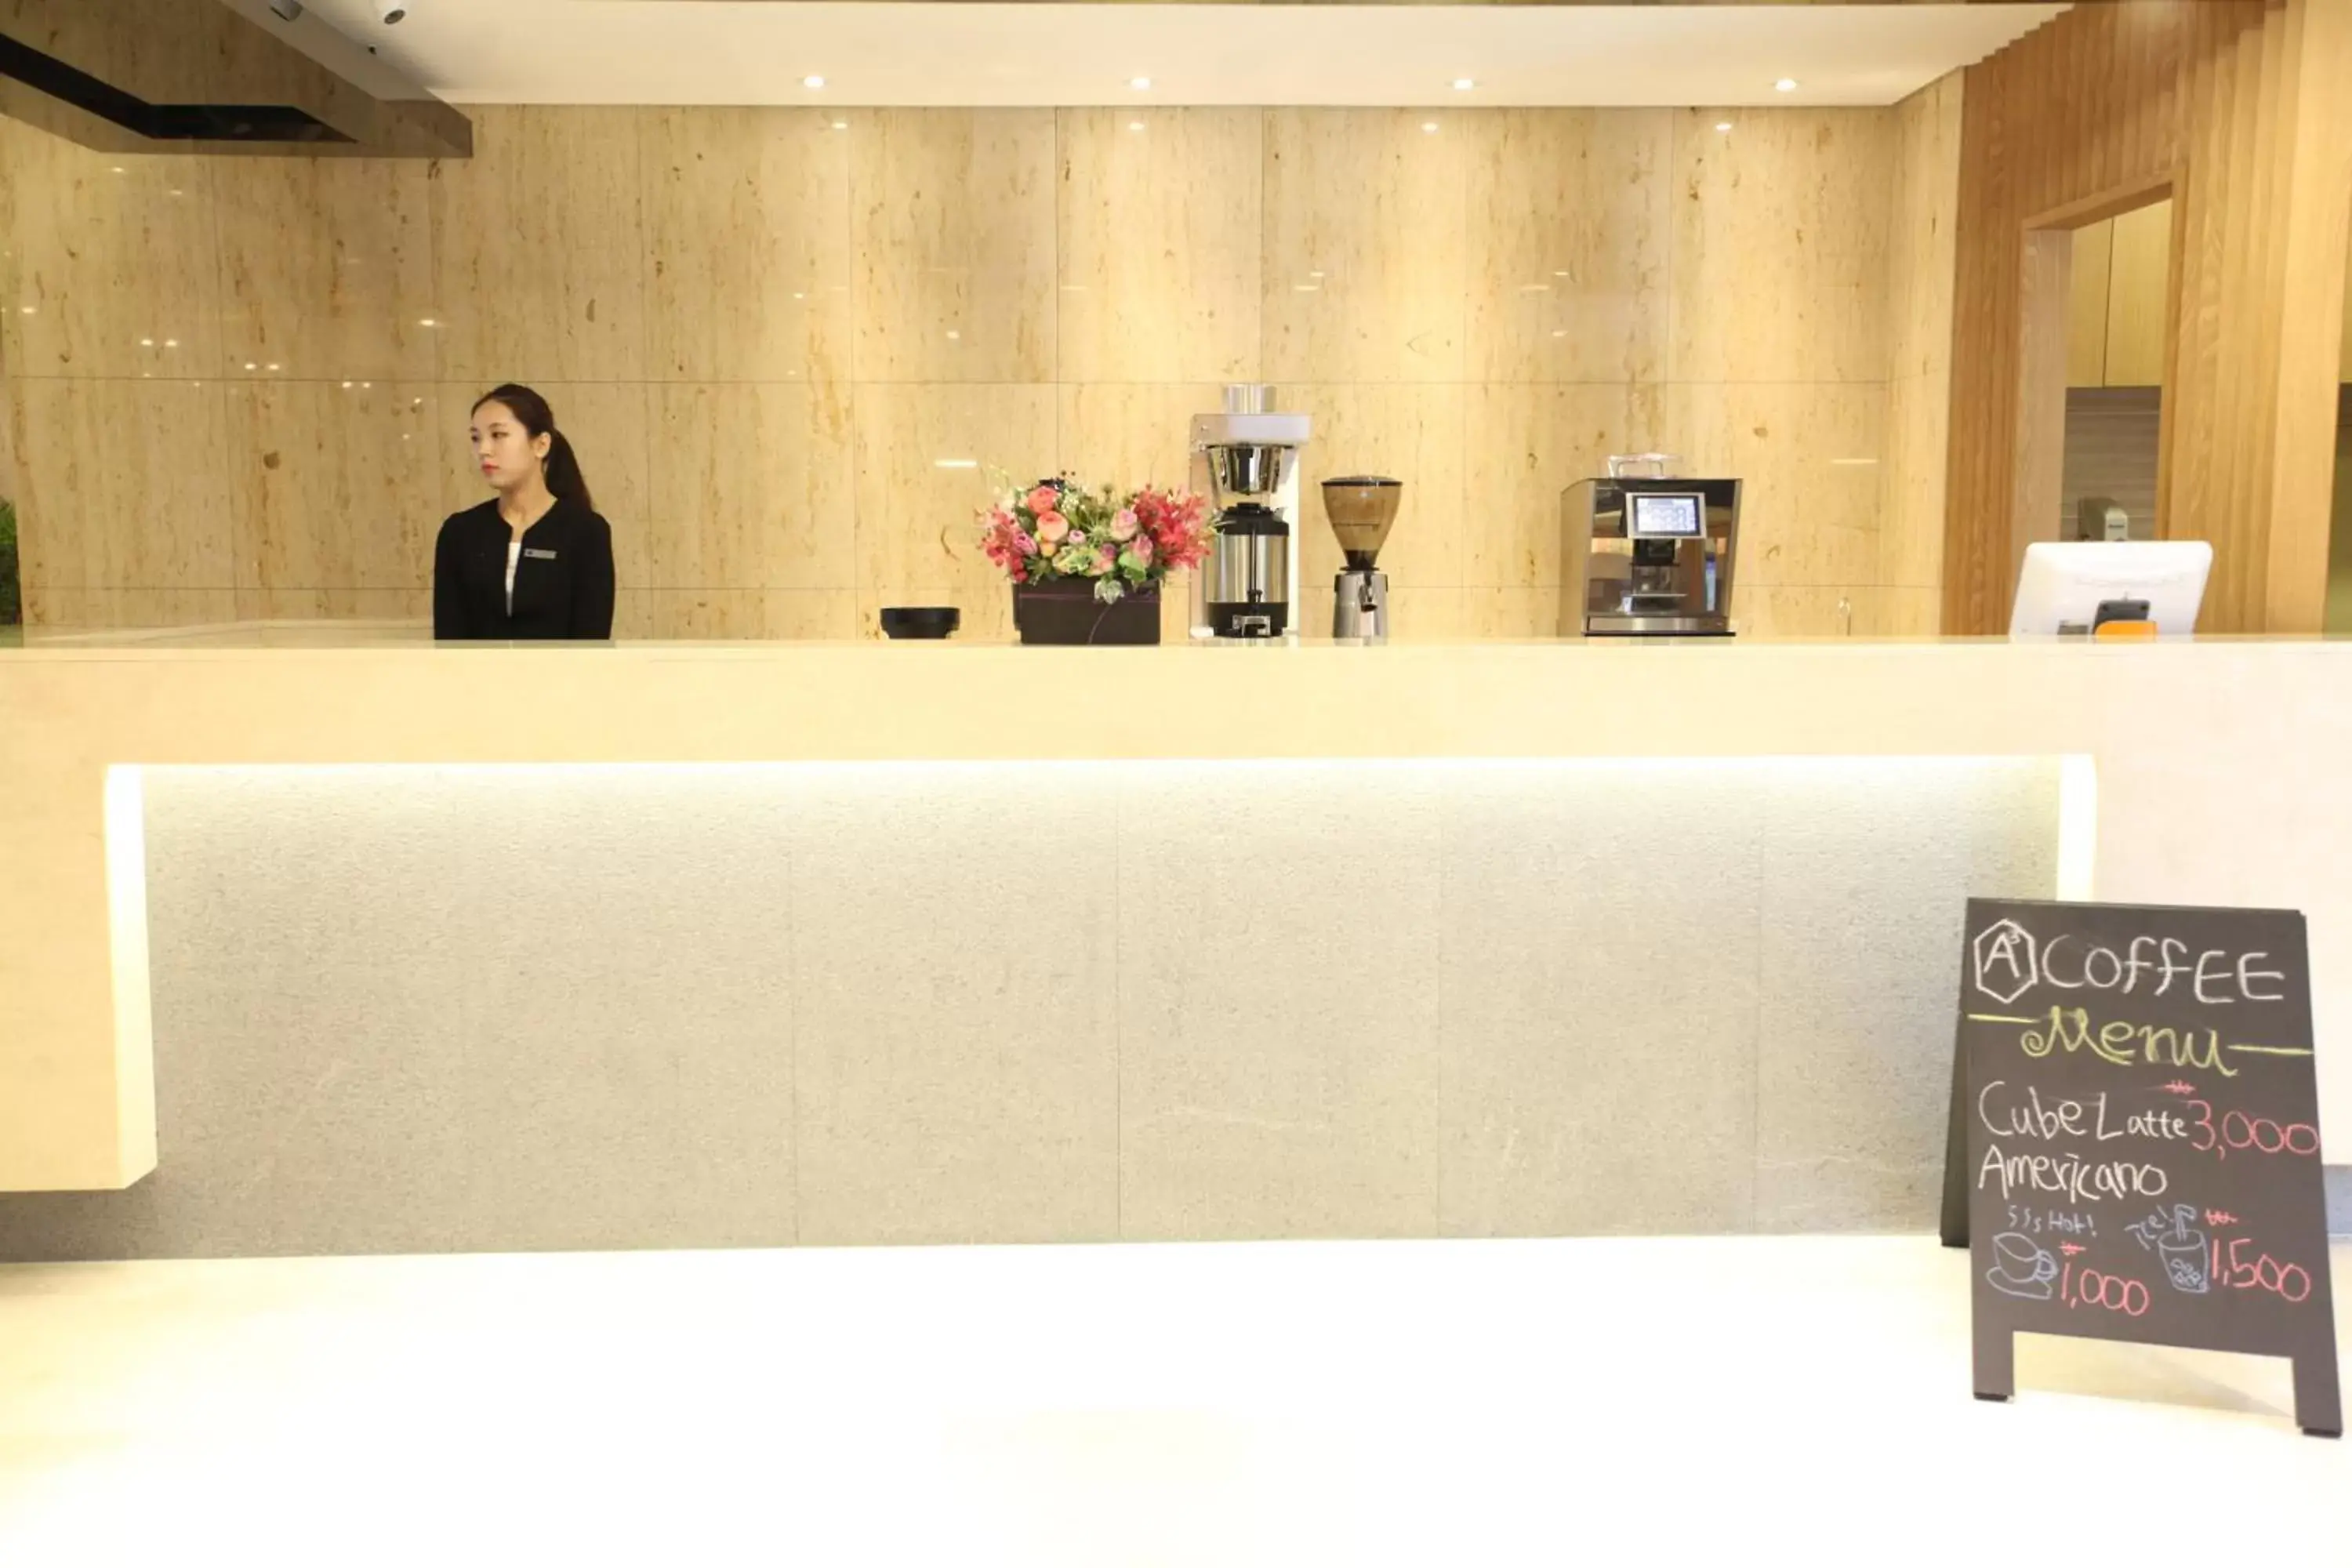 Lobby or reception in Acube Hotel Dongdaemun